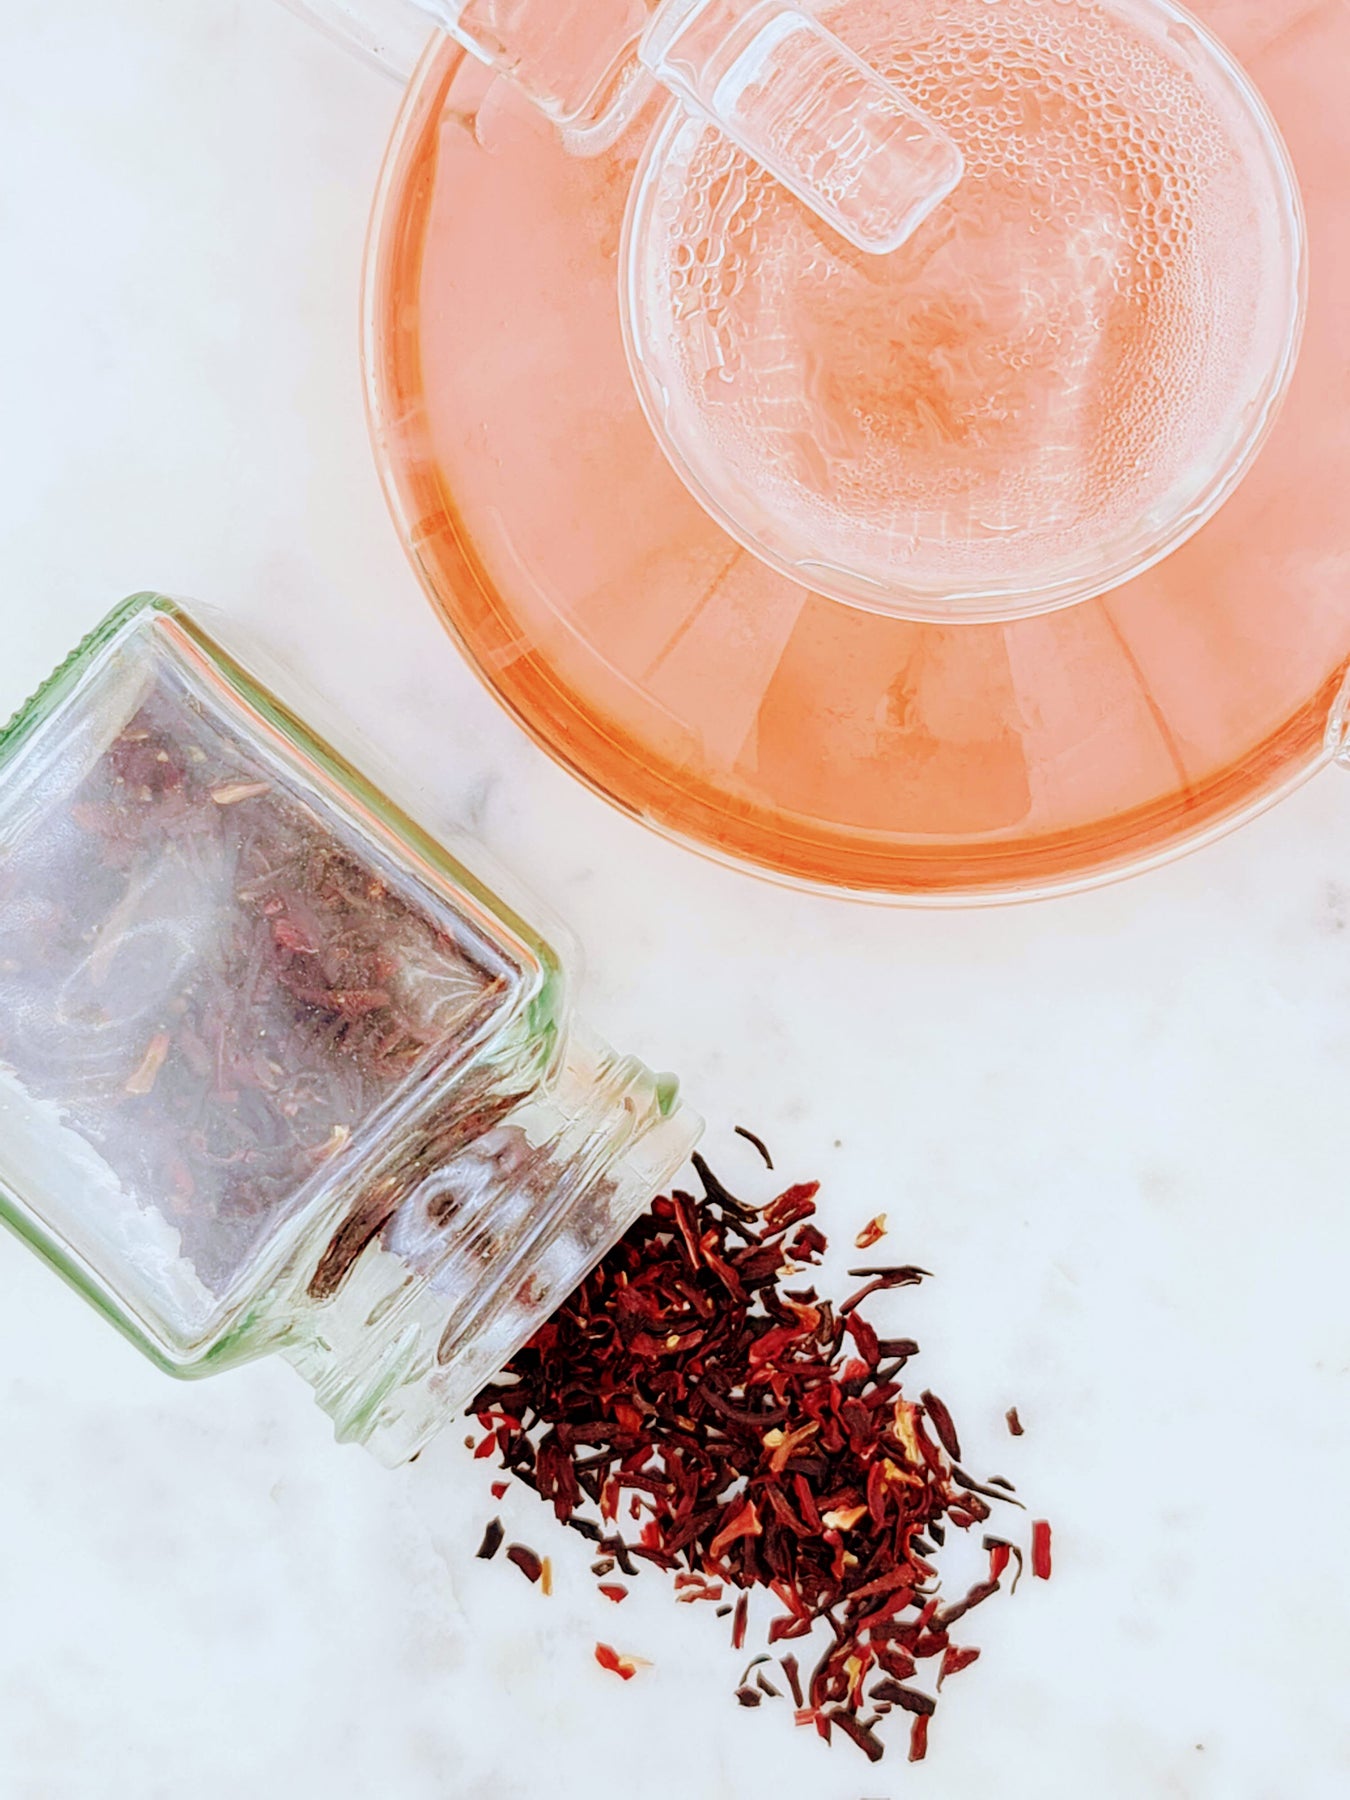 Teas and Spices